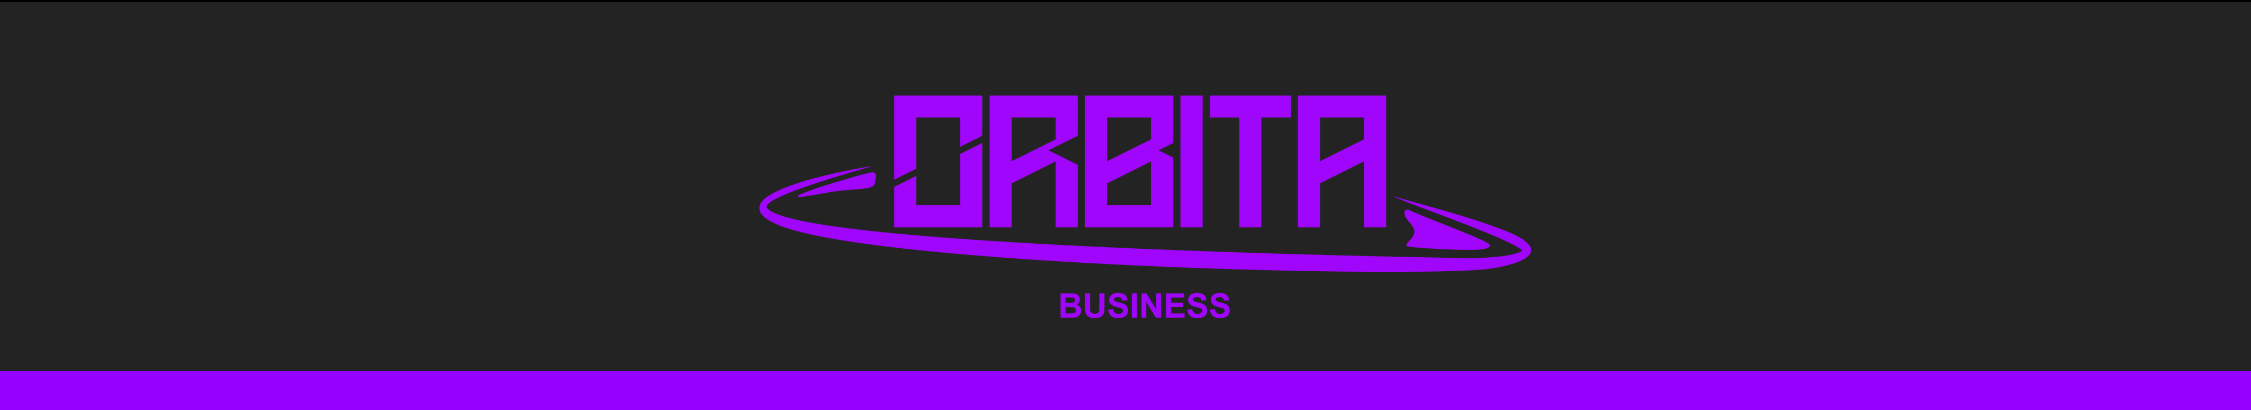 Orbita Businesss profilbanner